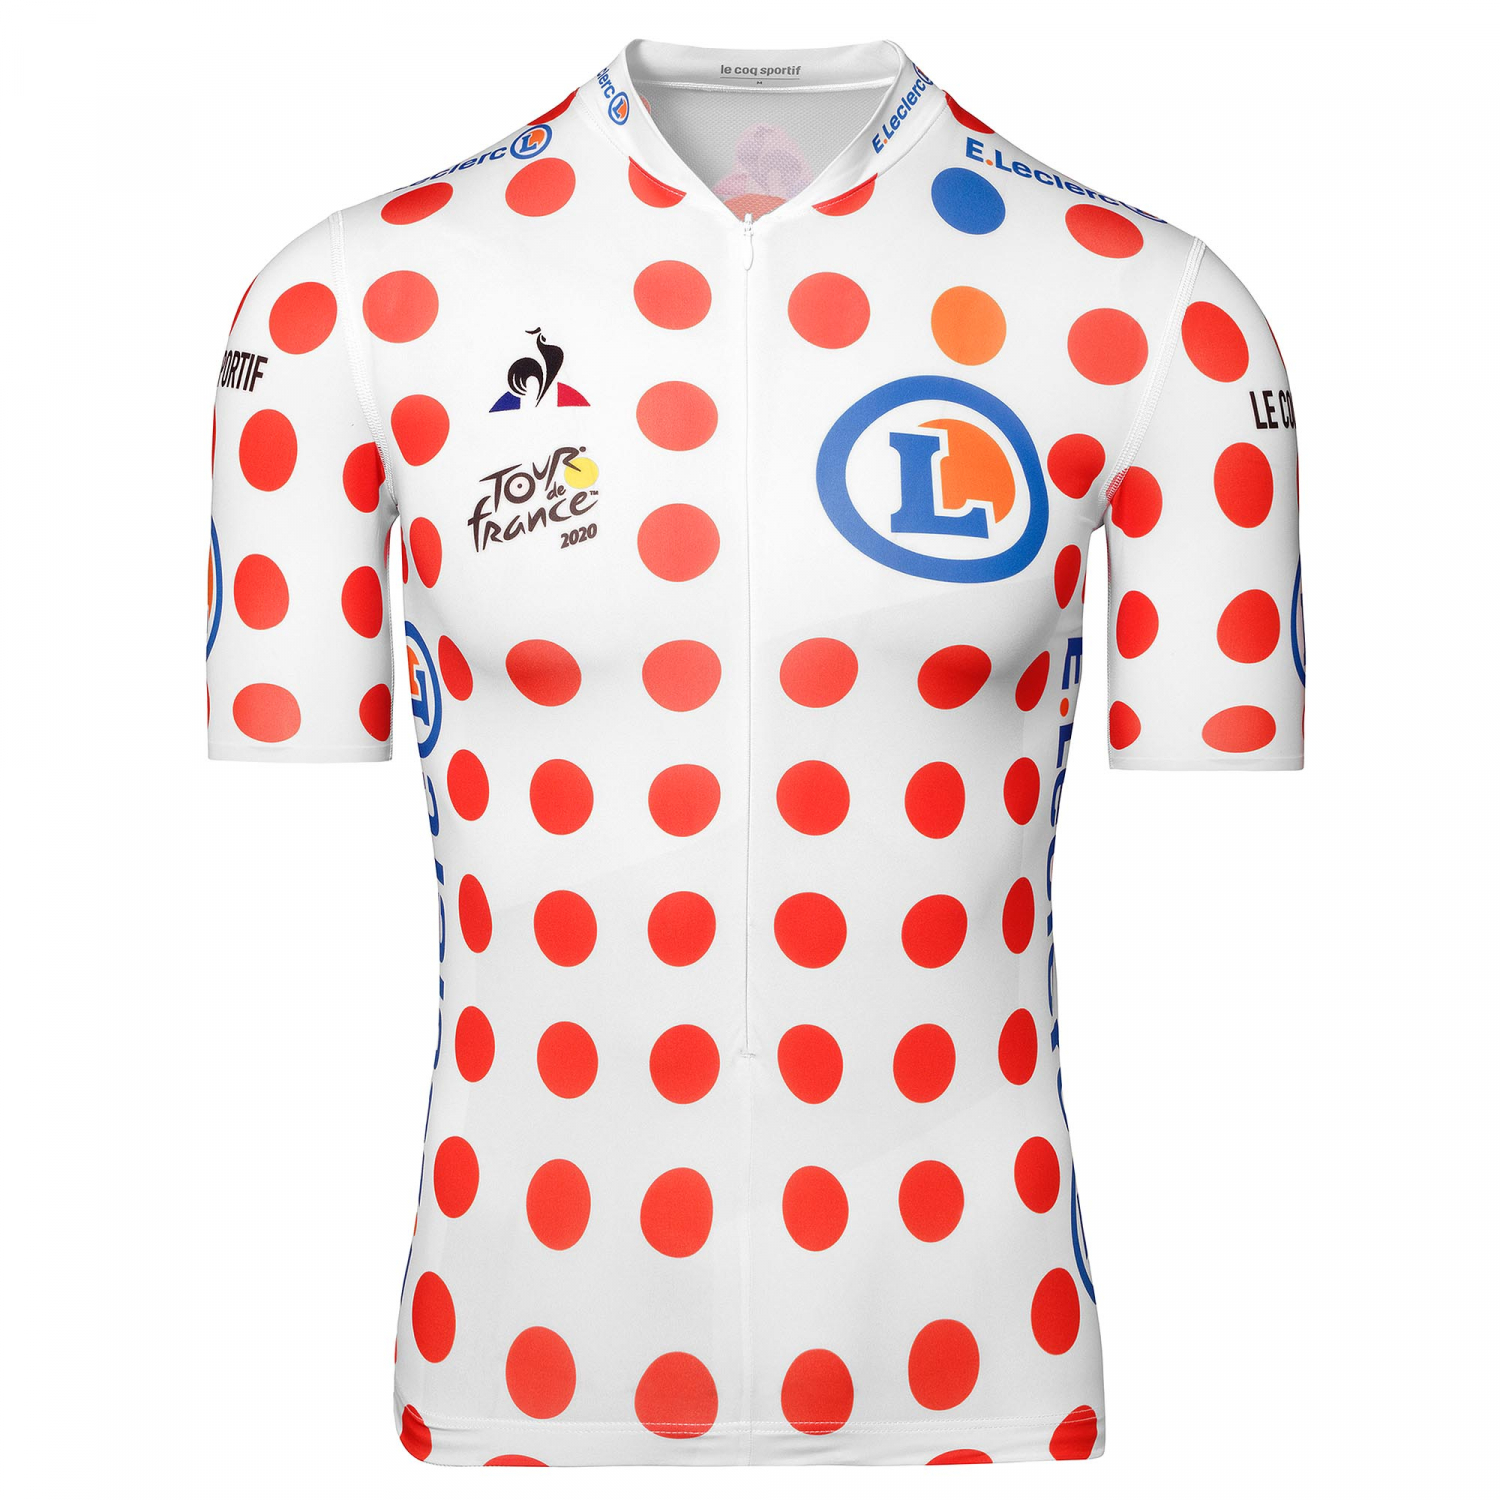 Le Coq Sportif Tour de France "Climber" Polka Dots Cycling Jersey